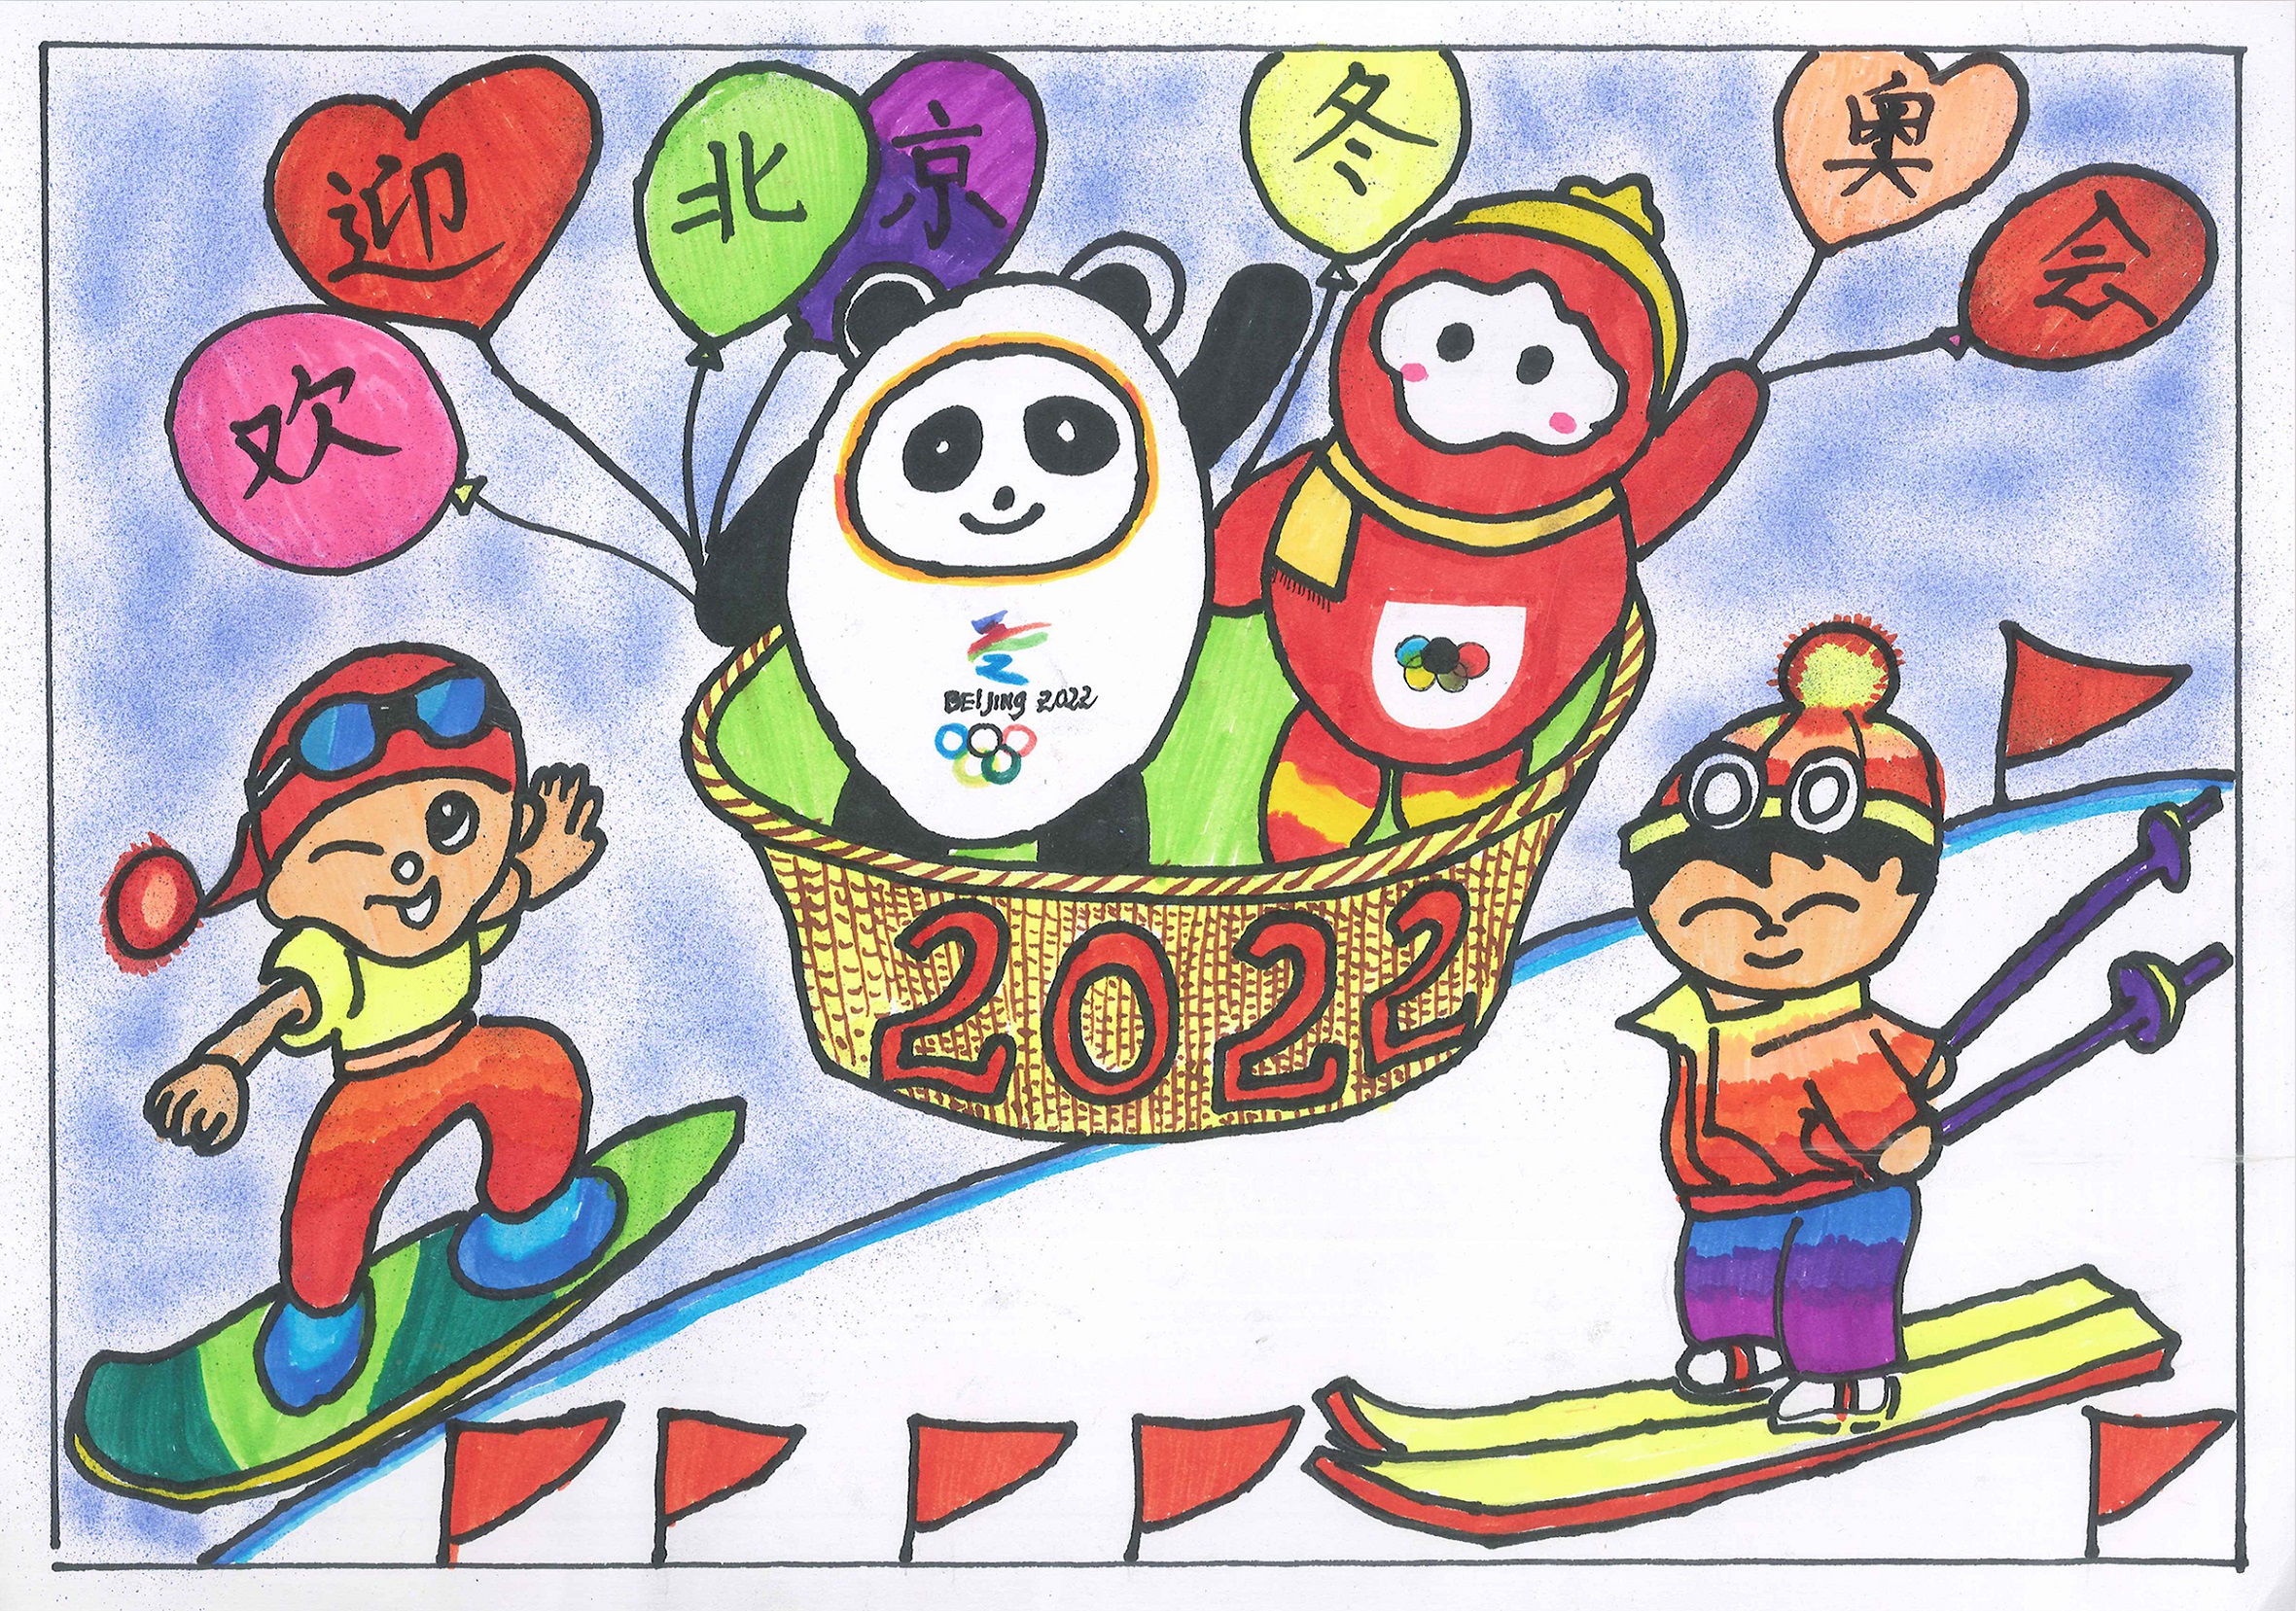 欢迎北京冬奥会 Welcome to the Beijing Winter Olympics+徐艺晨 Xu Yichen